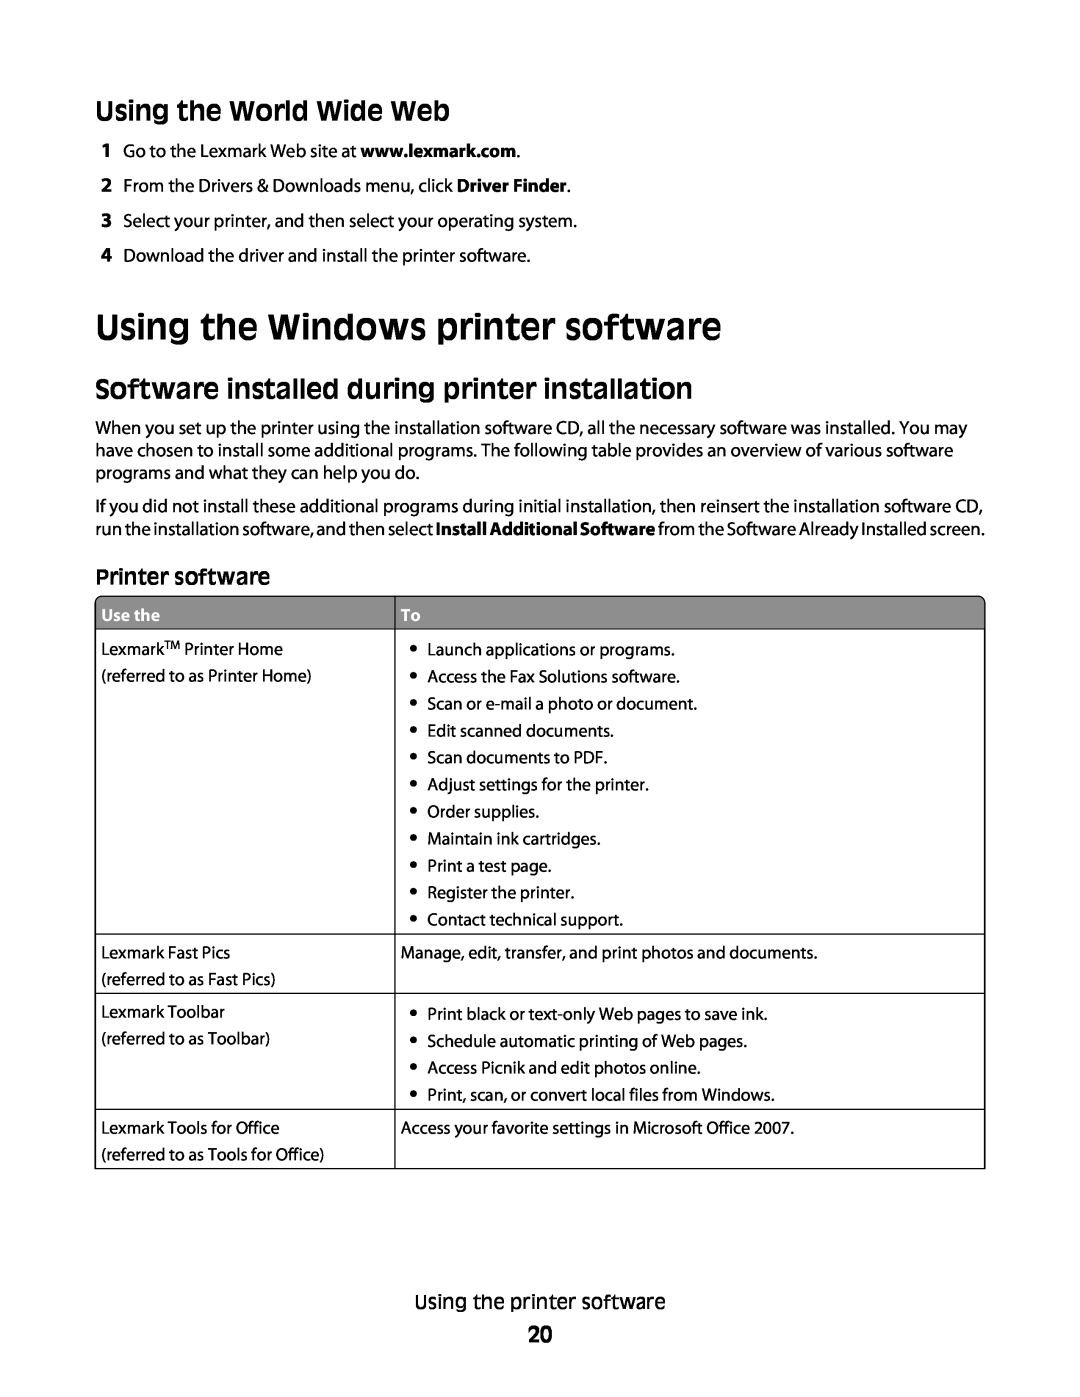 Lexmark Pro803, Pro800 manual Using the Windows printer software, Using the World Wide Web, Printer software, Use the 